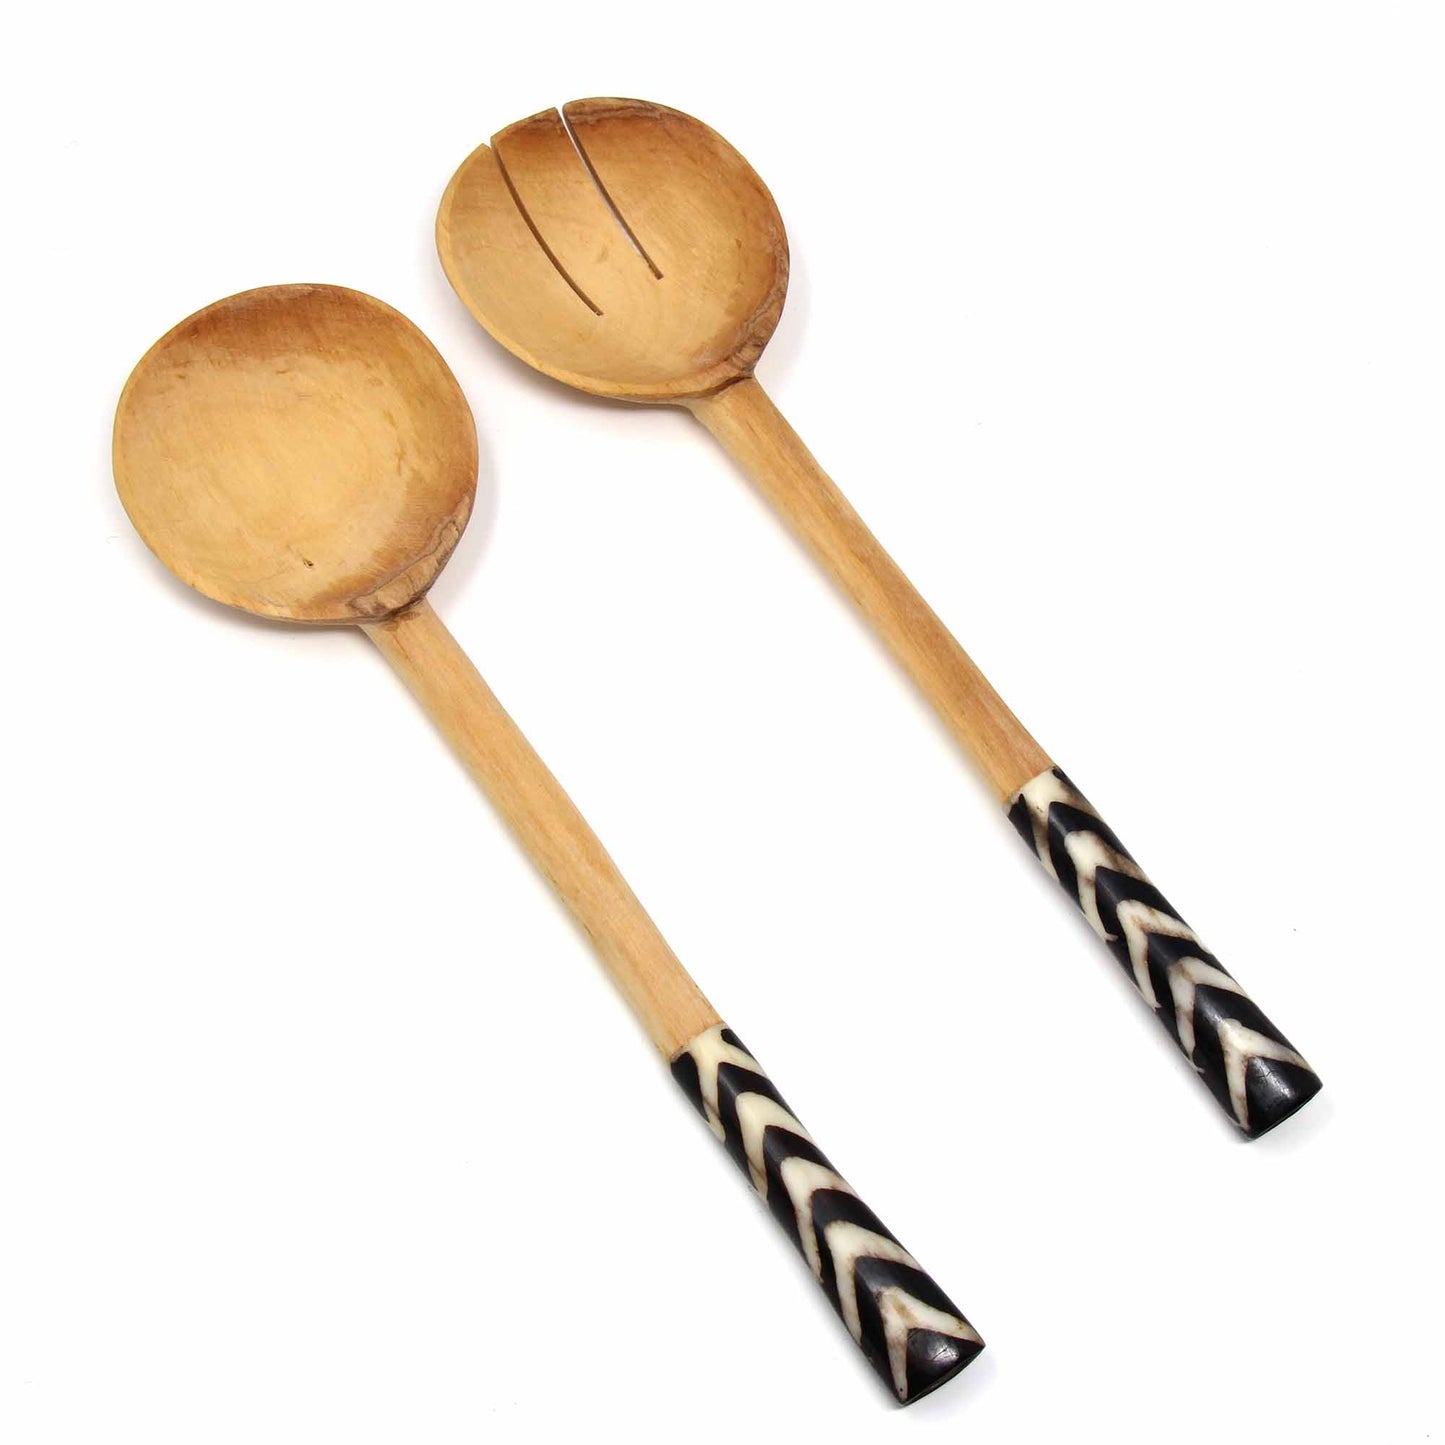 olive-serving-set-with-bone-handles-10-inch